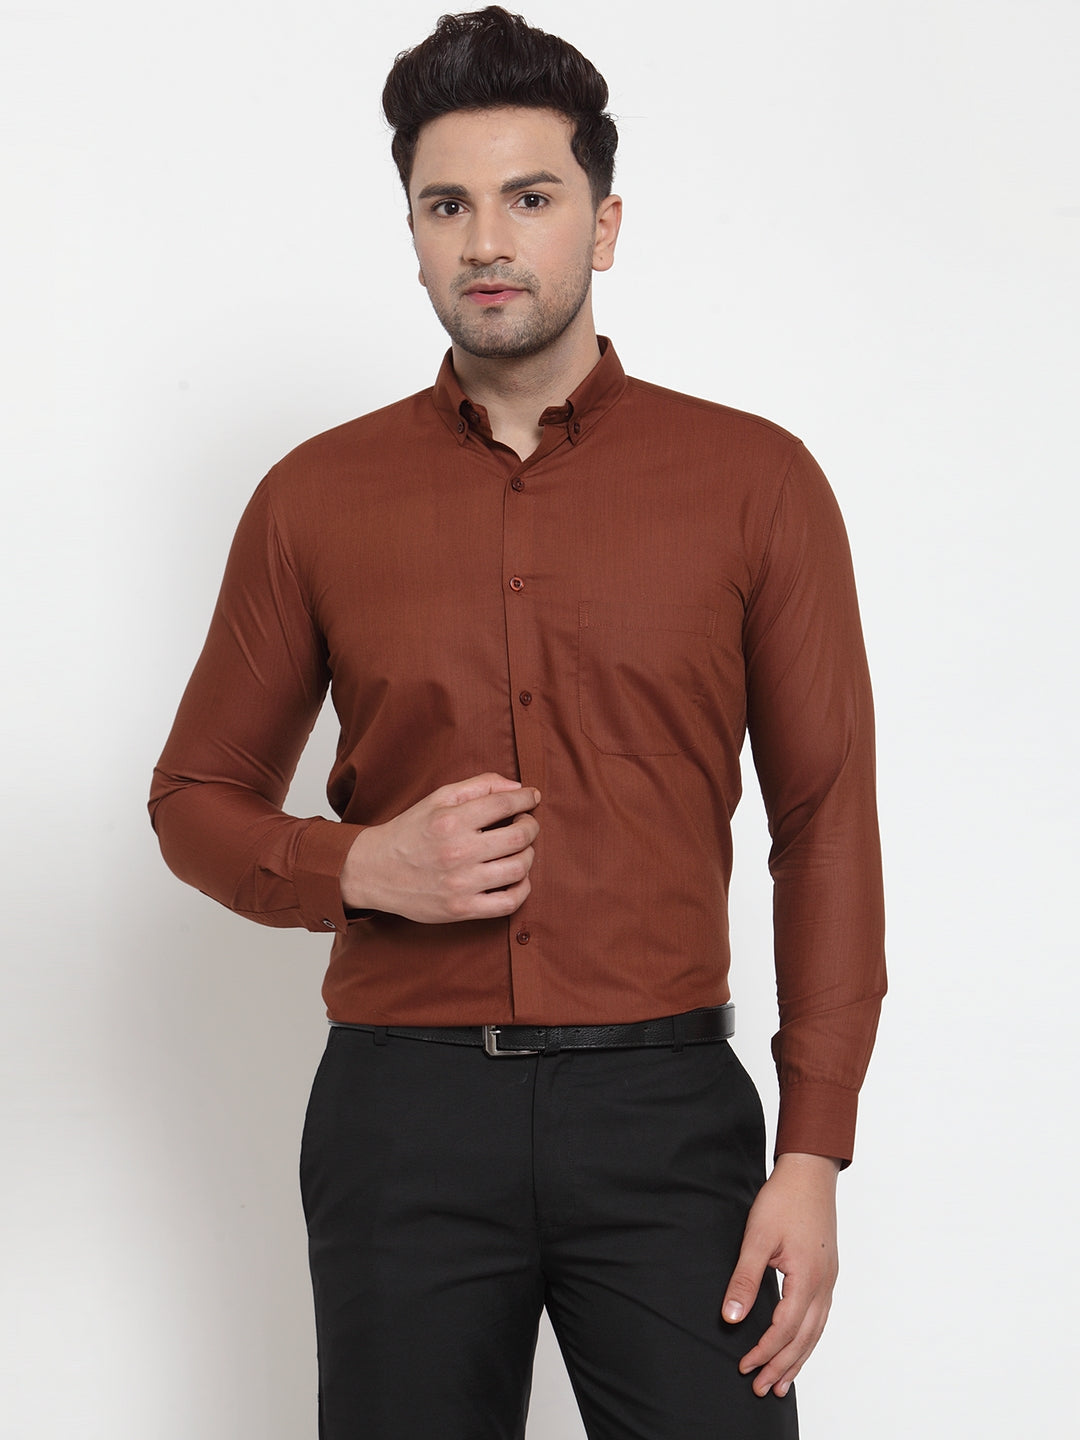 Men's Brown Cotton Solid Button Down Formal Shirts ( SF 713Brown ) - Jainish